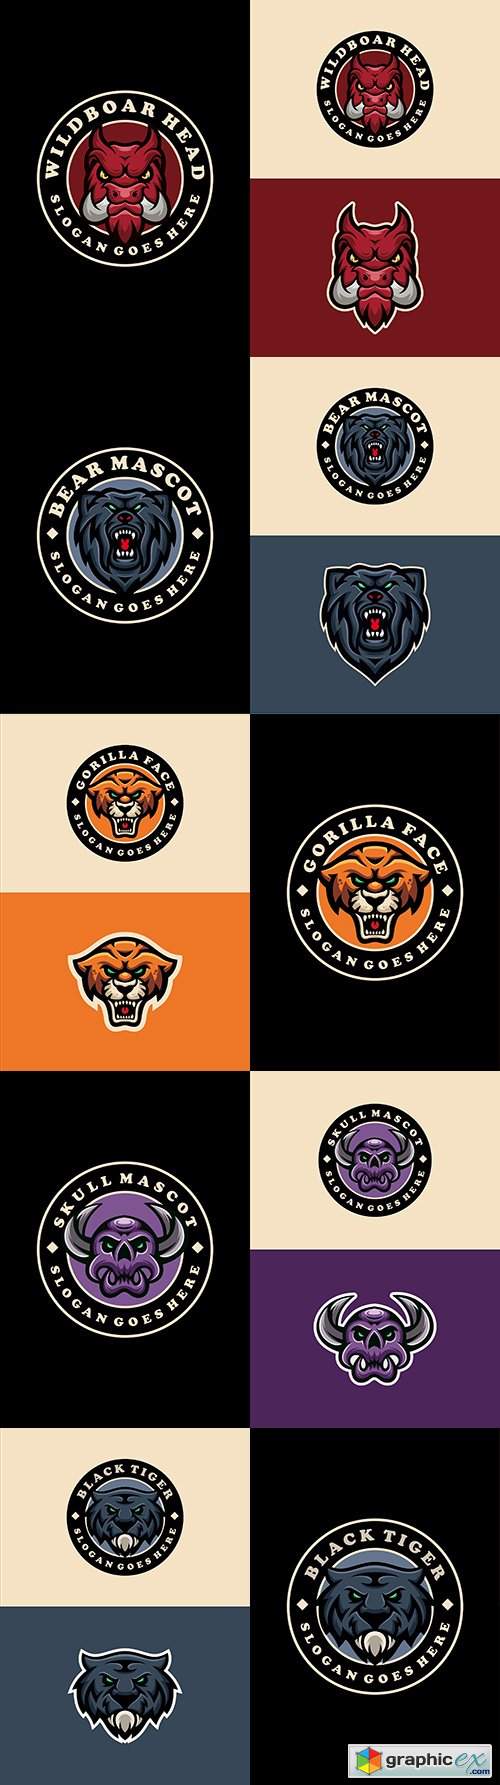  Emblem mascot and Brand name logos design 7 